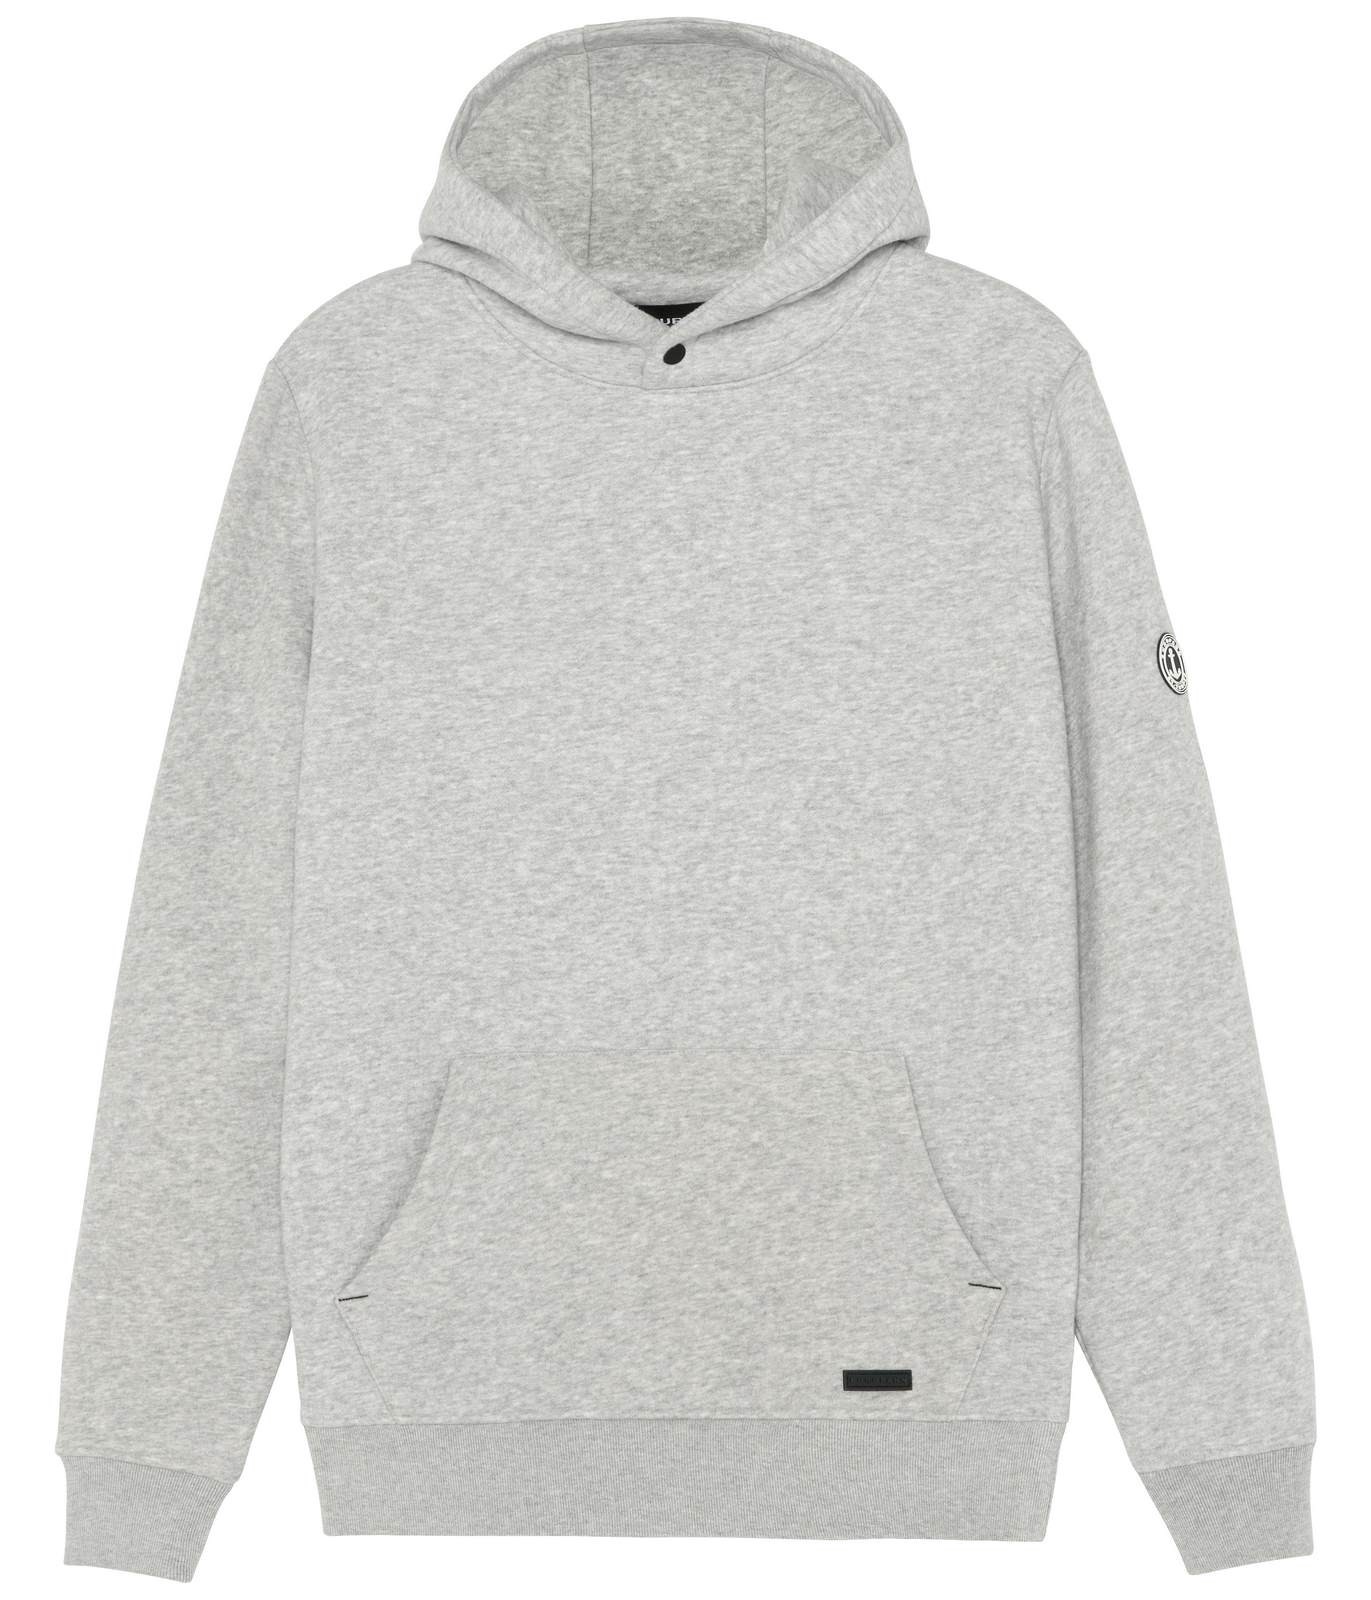 Cotton grey hooded sweat | Quality brand Europann